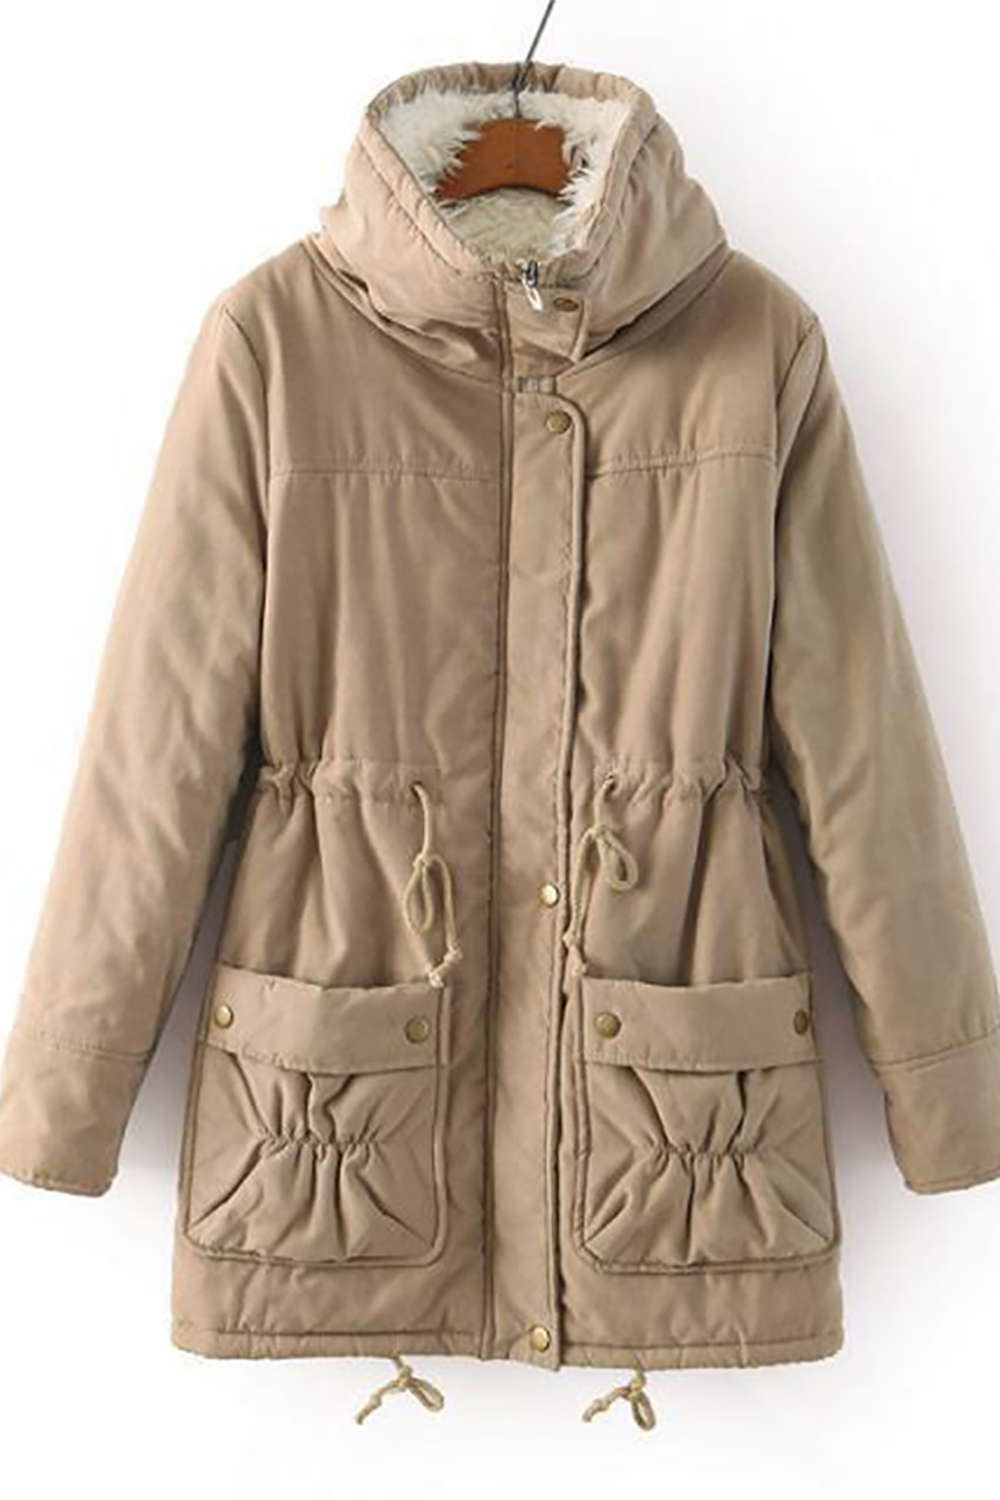 Iyasson Winter Thick Warm Lamb Wool Jacket Coat